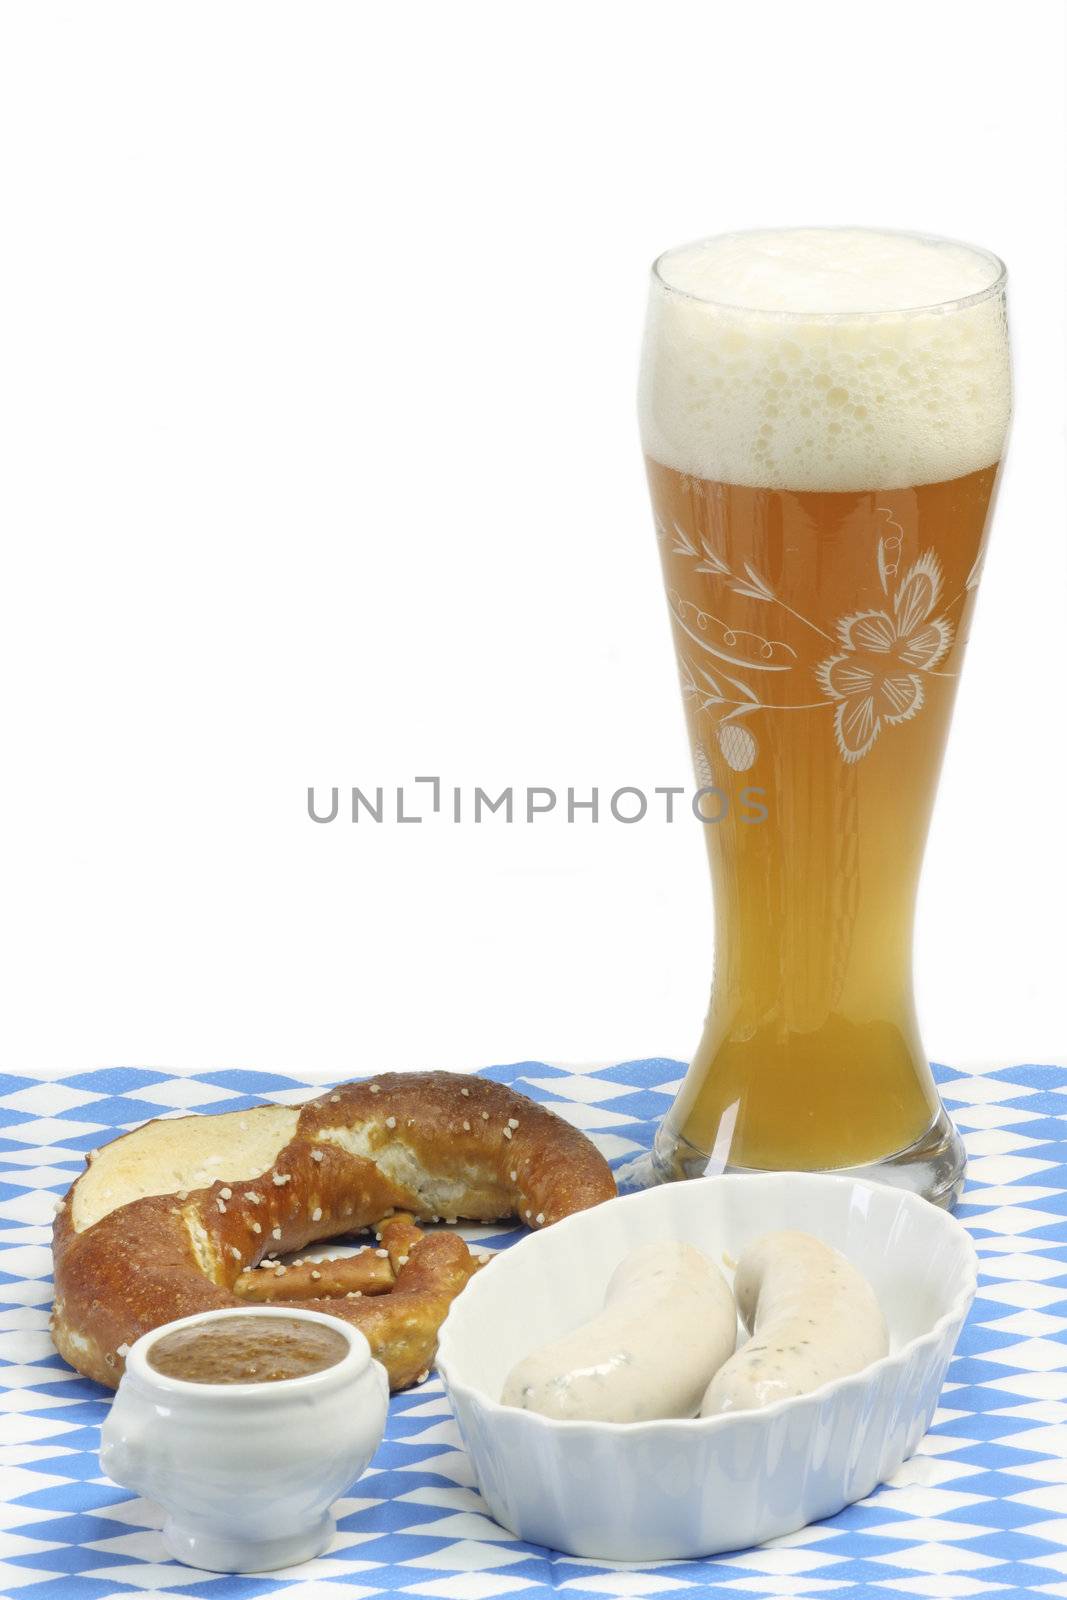 Bavarian Veal Sausage by Teamarbeit